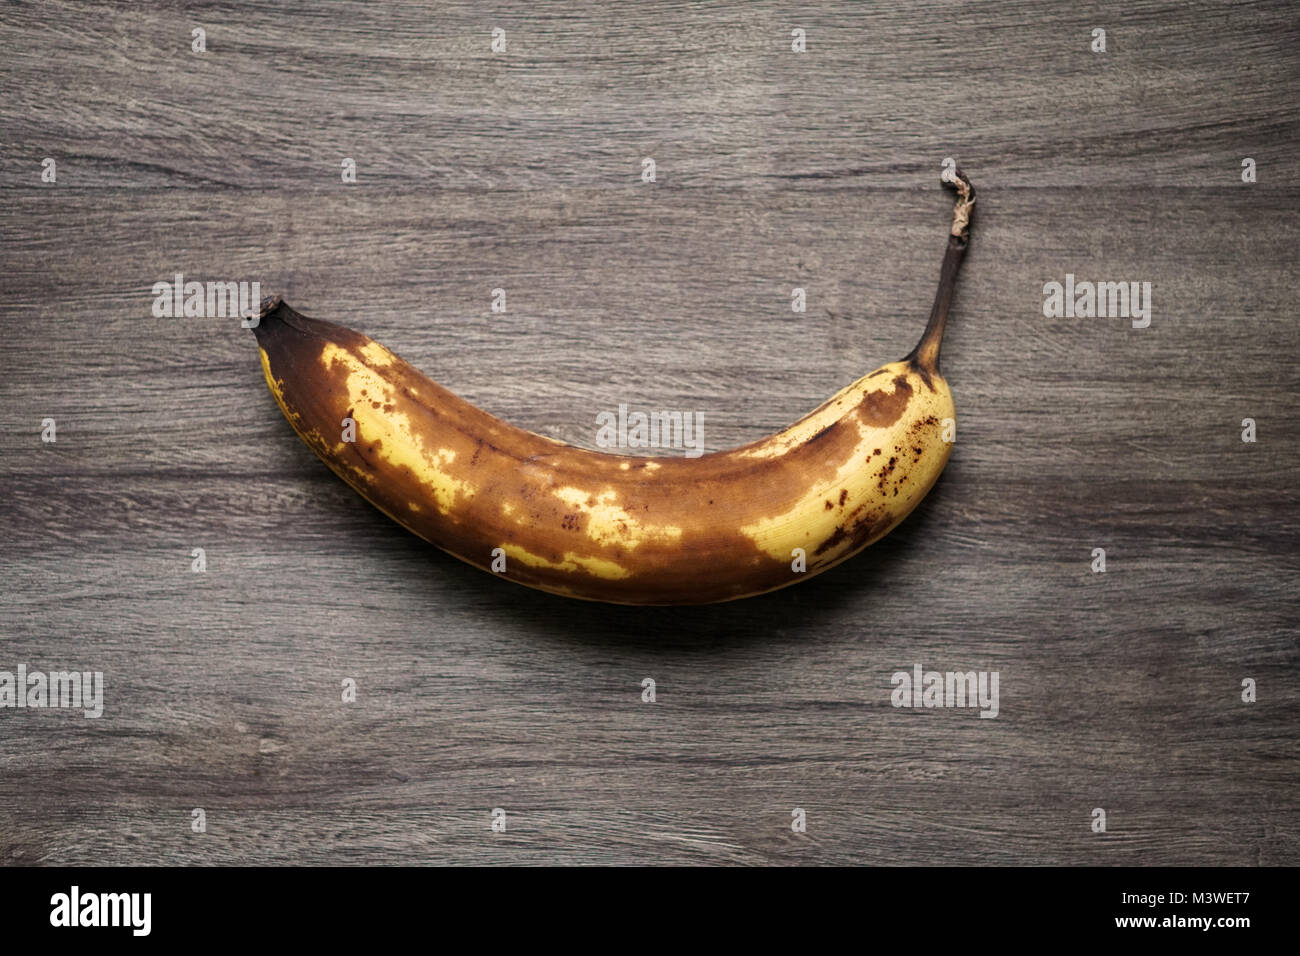 overrripe banana with brown skin Stock Photo